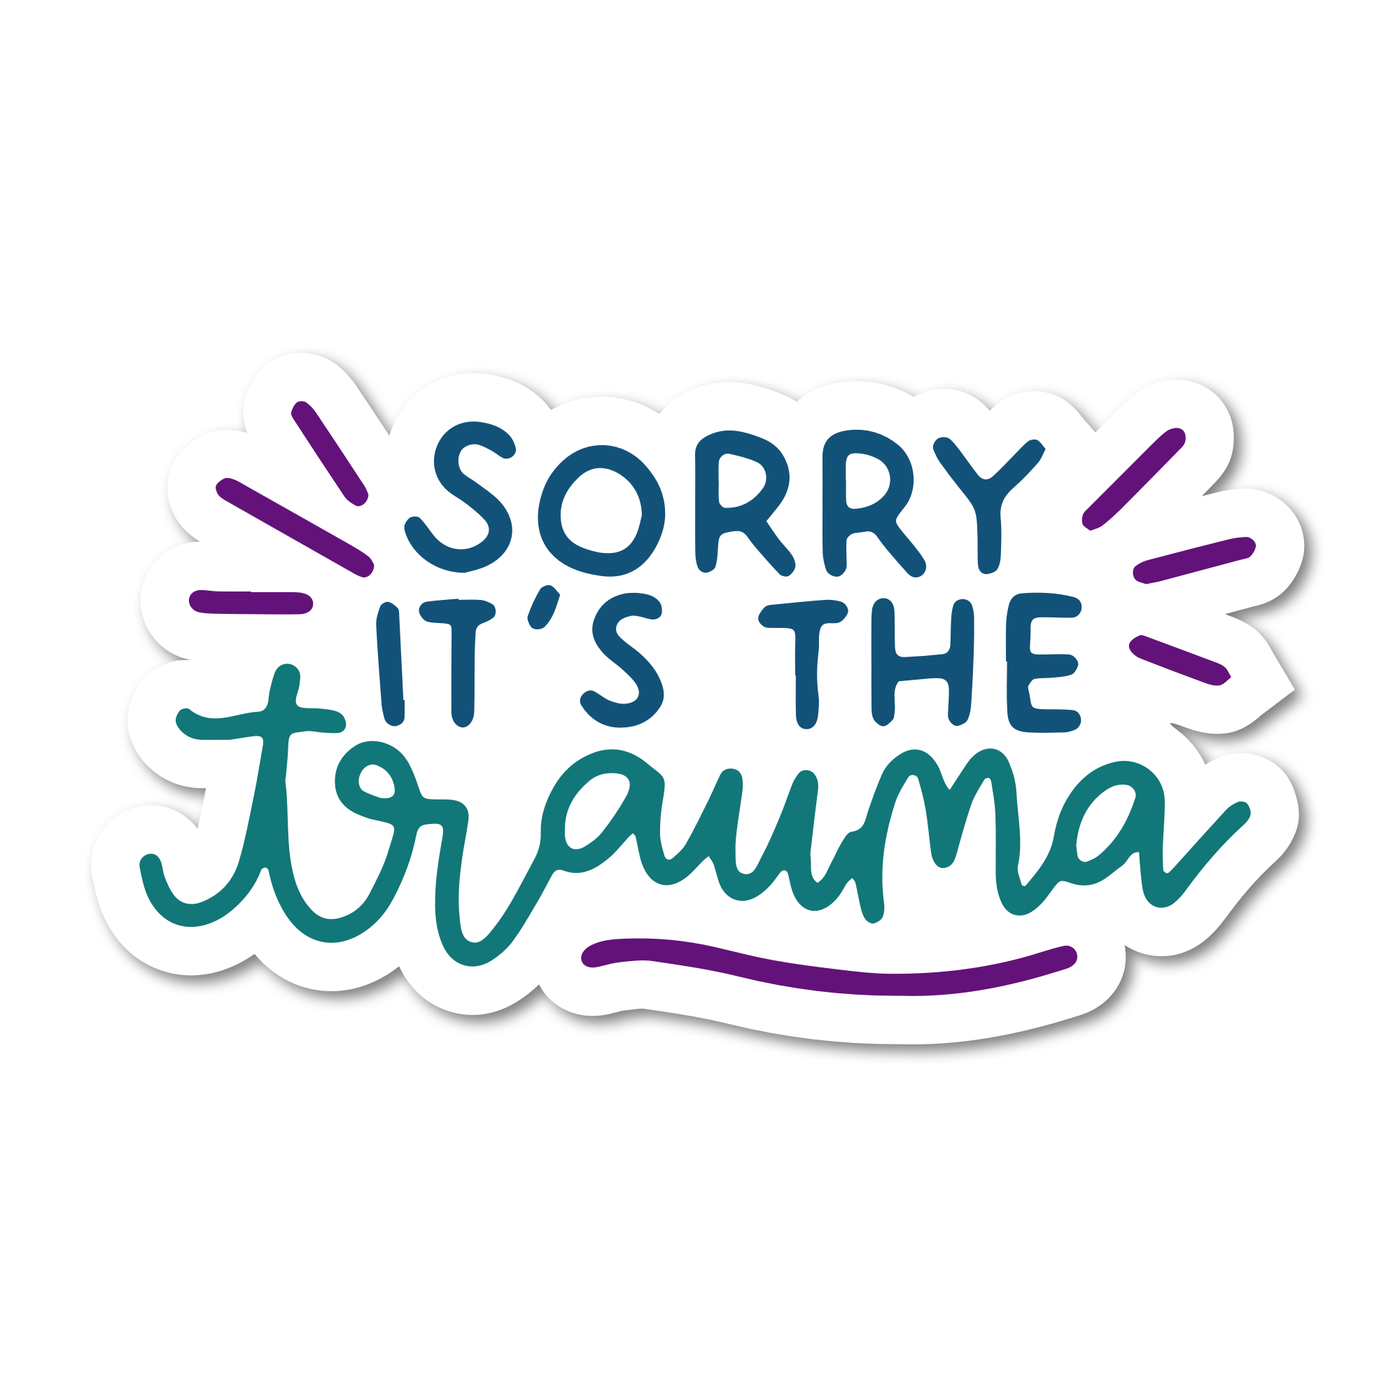 Sorry, It's The Trauma: 3 inch / Vinyl Sticker